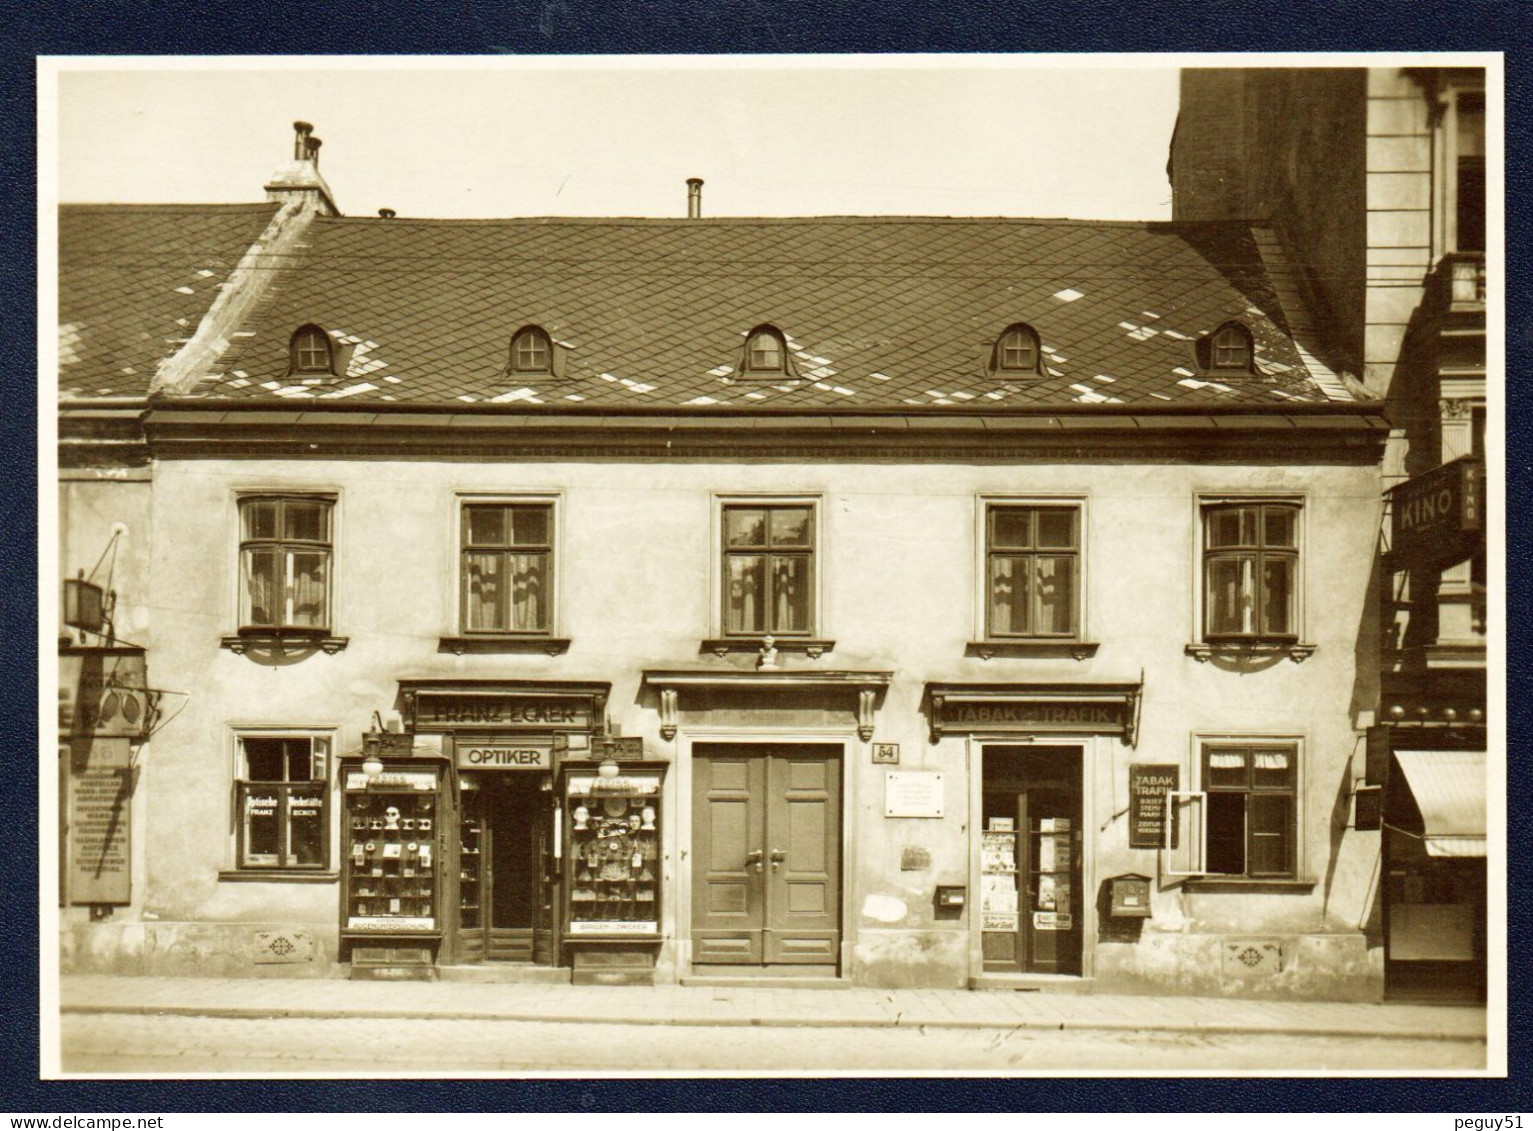 Vienne. Himmelpfortgrund (Wien IX). Maison Natale De Franz Schubert. Optiker Franz Ecker. Tabak-Trafik - Museos